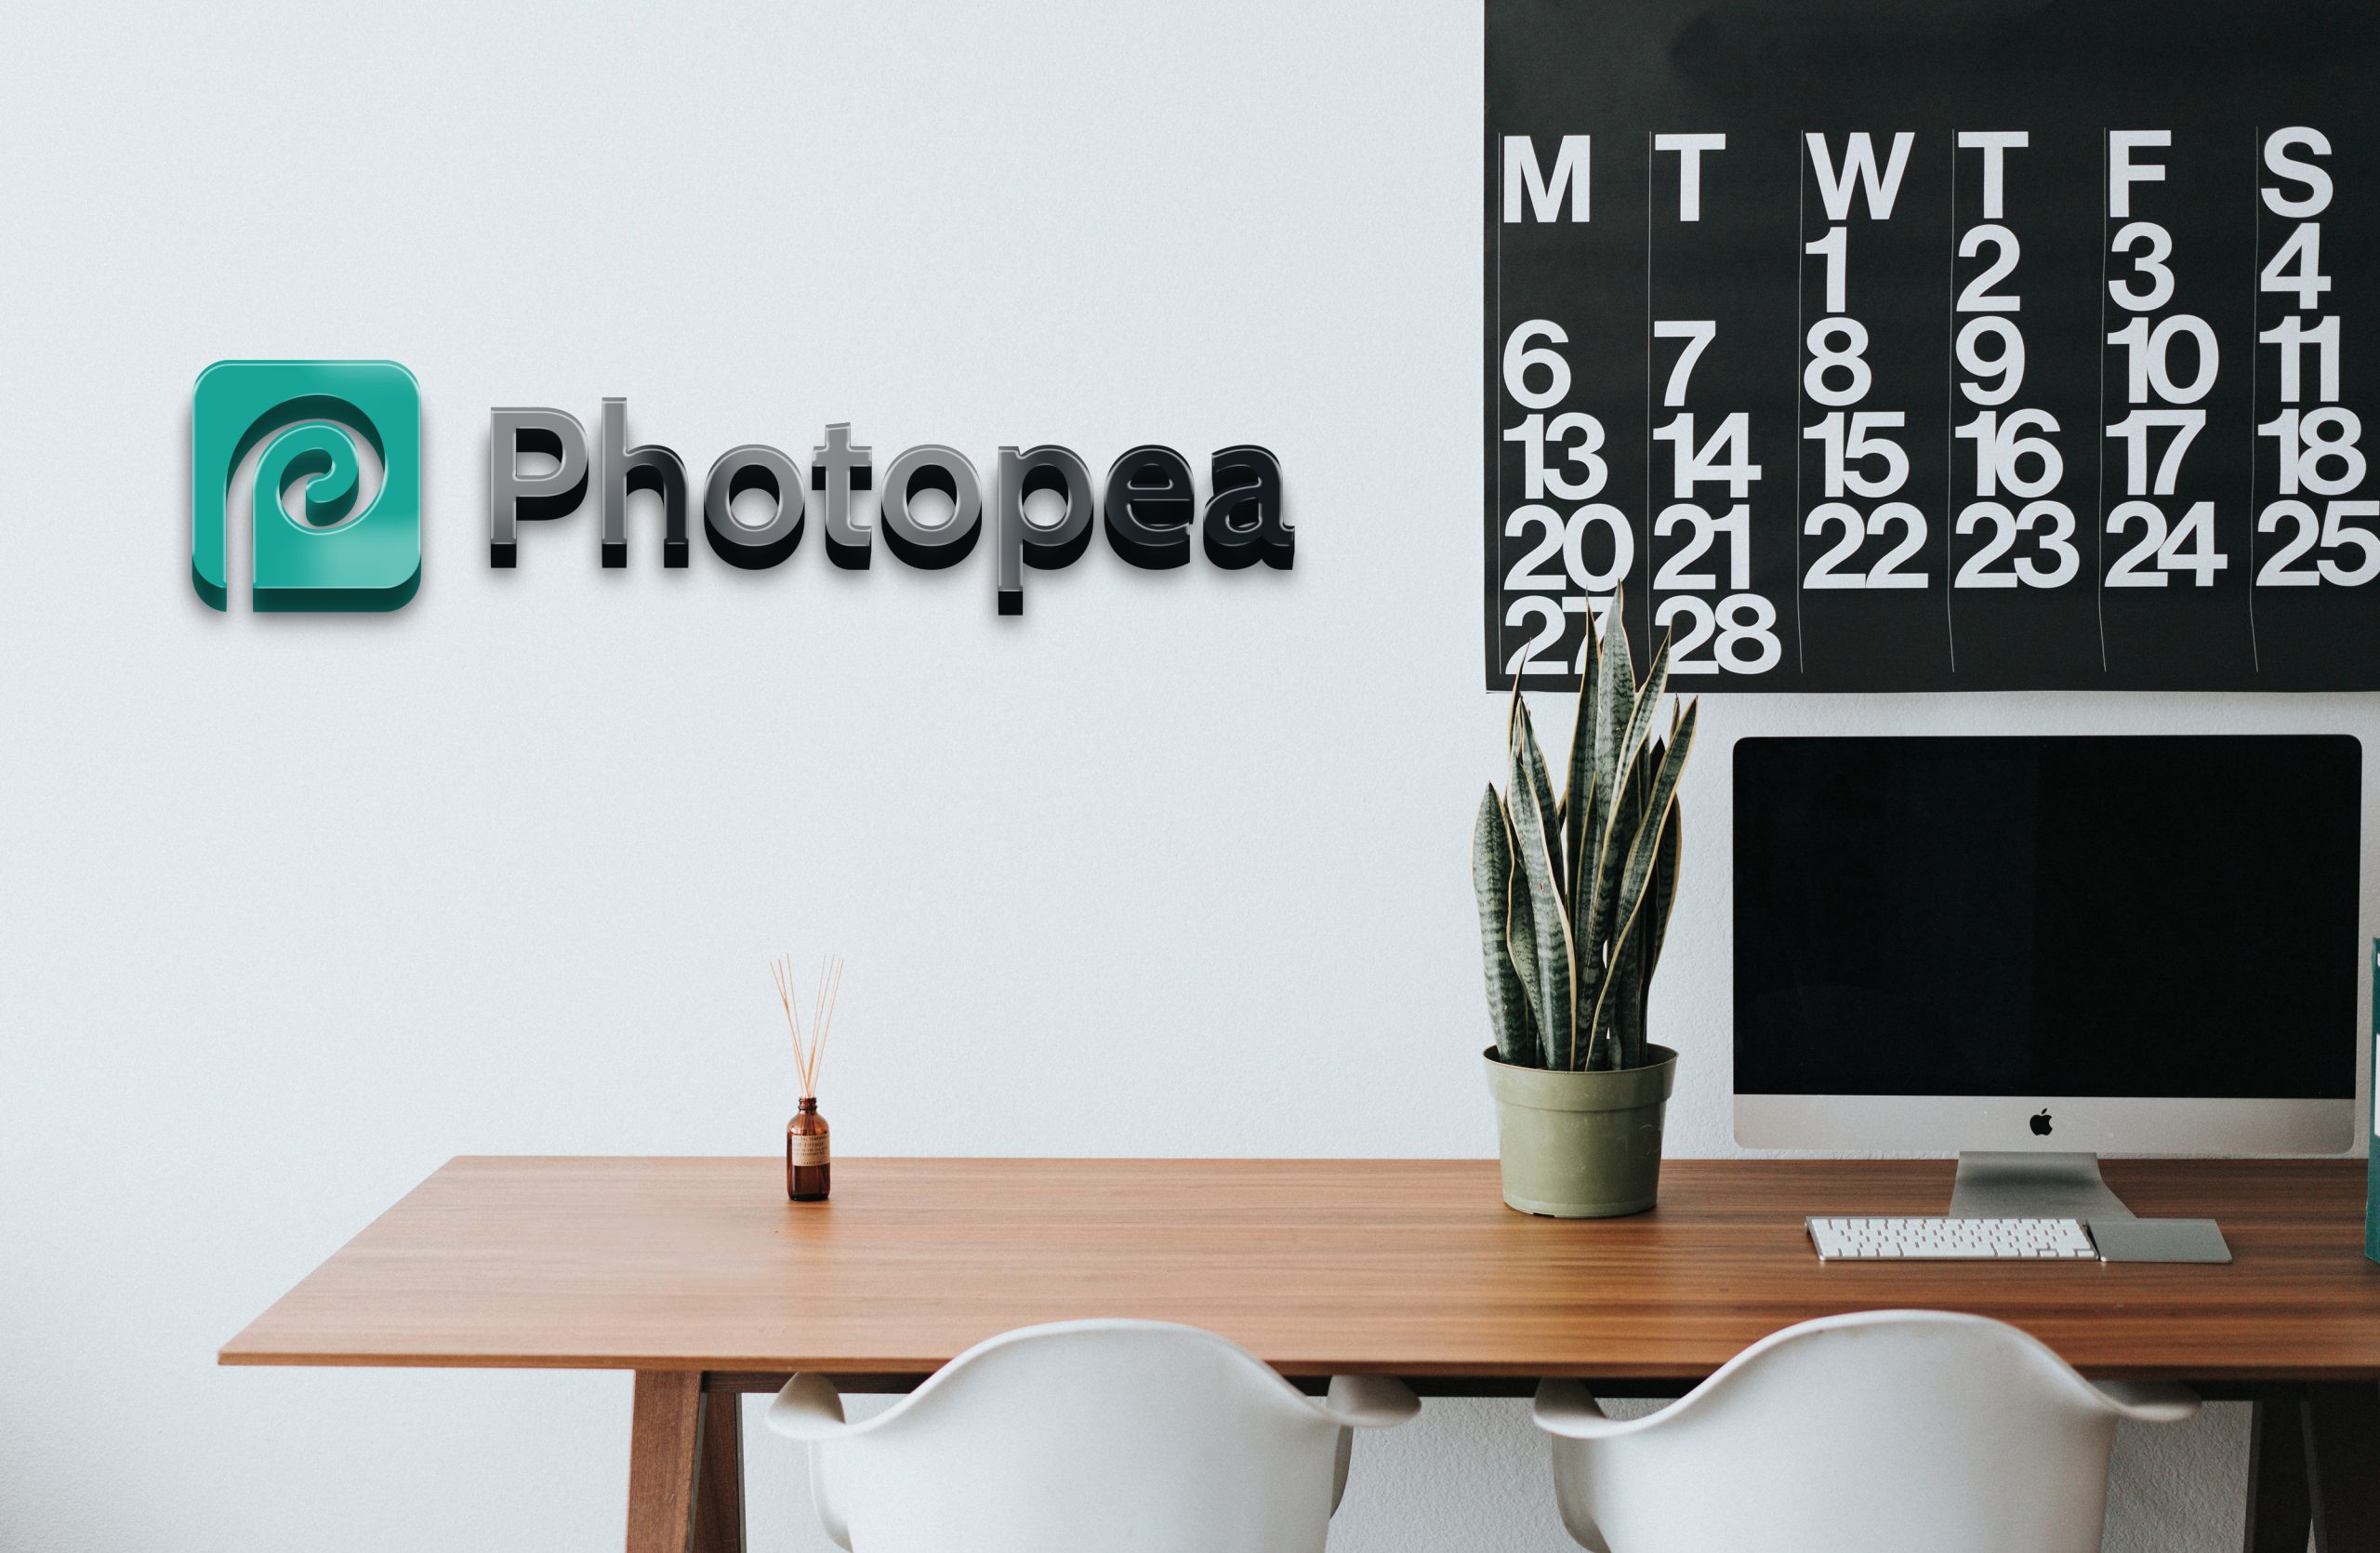 Photopea-Office-Wall-Logo-Mockup